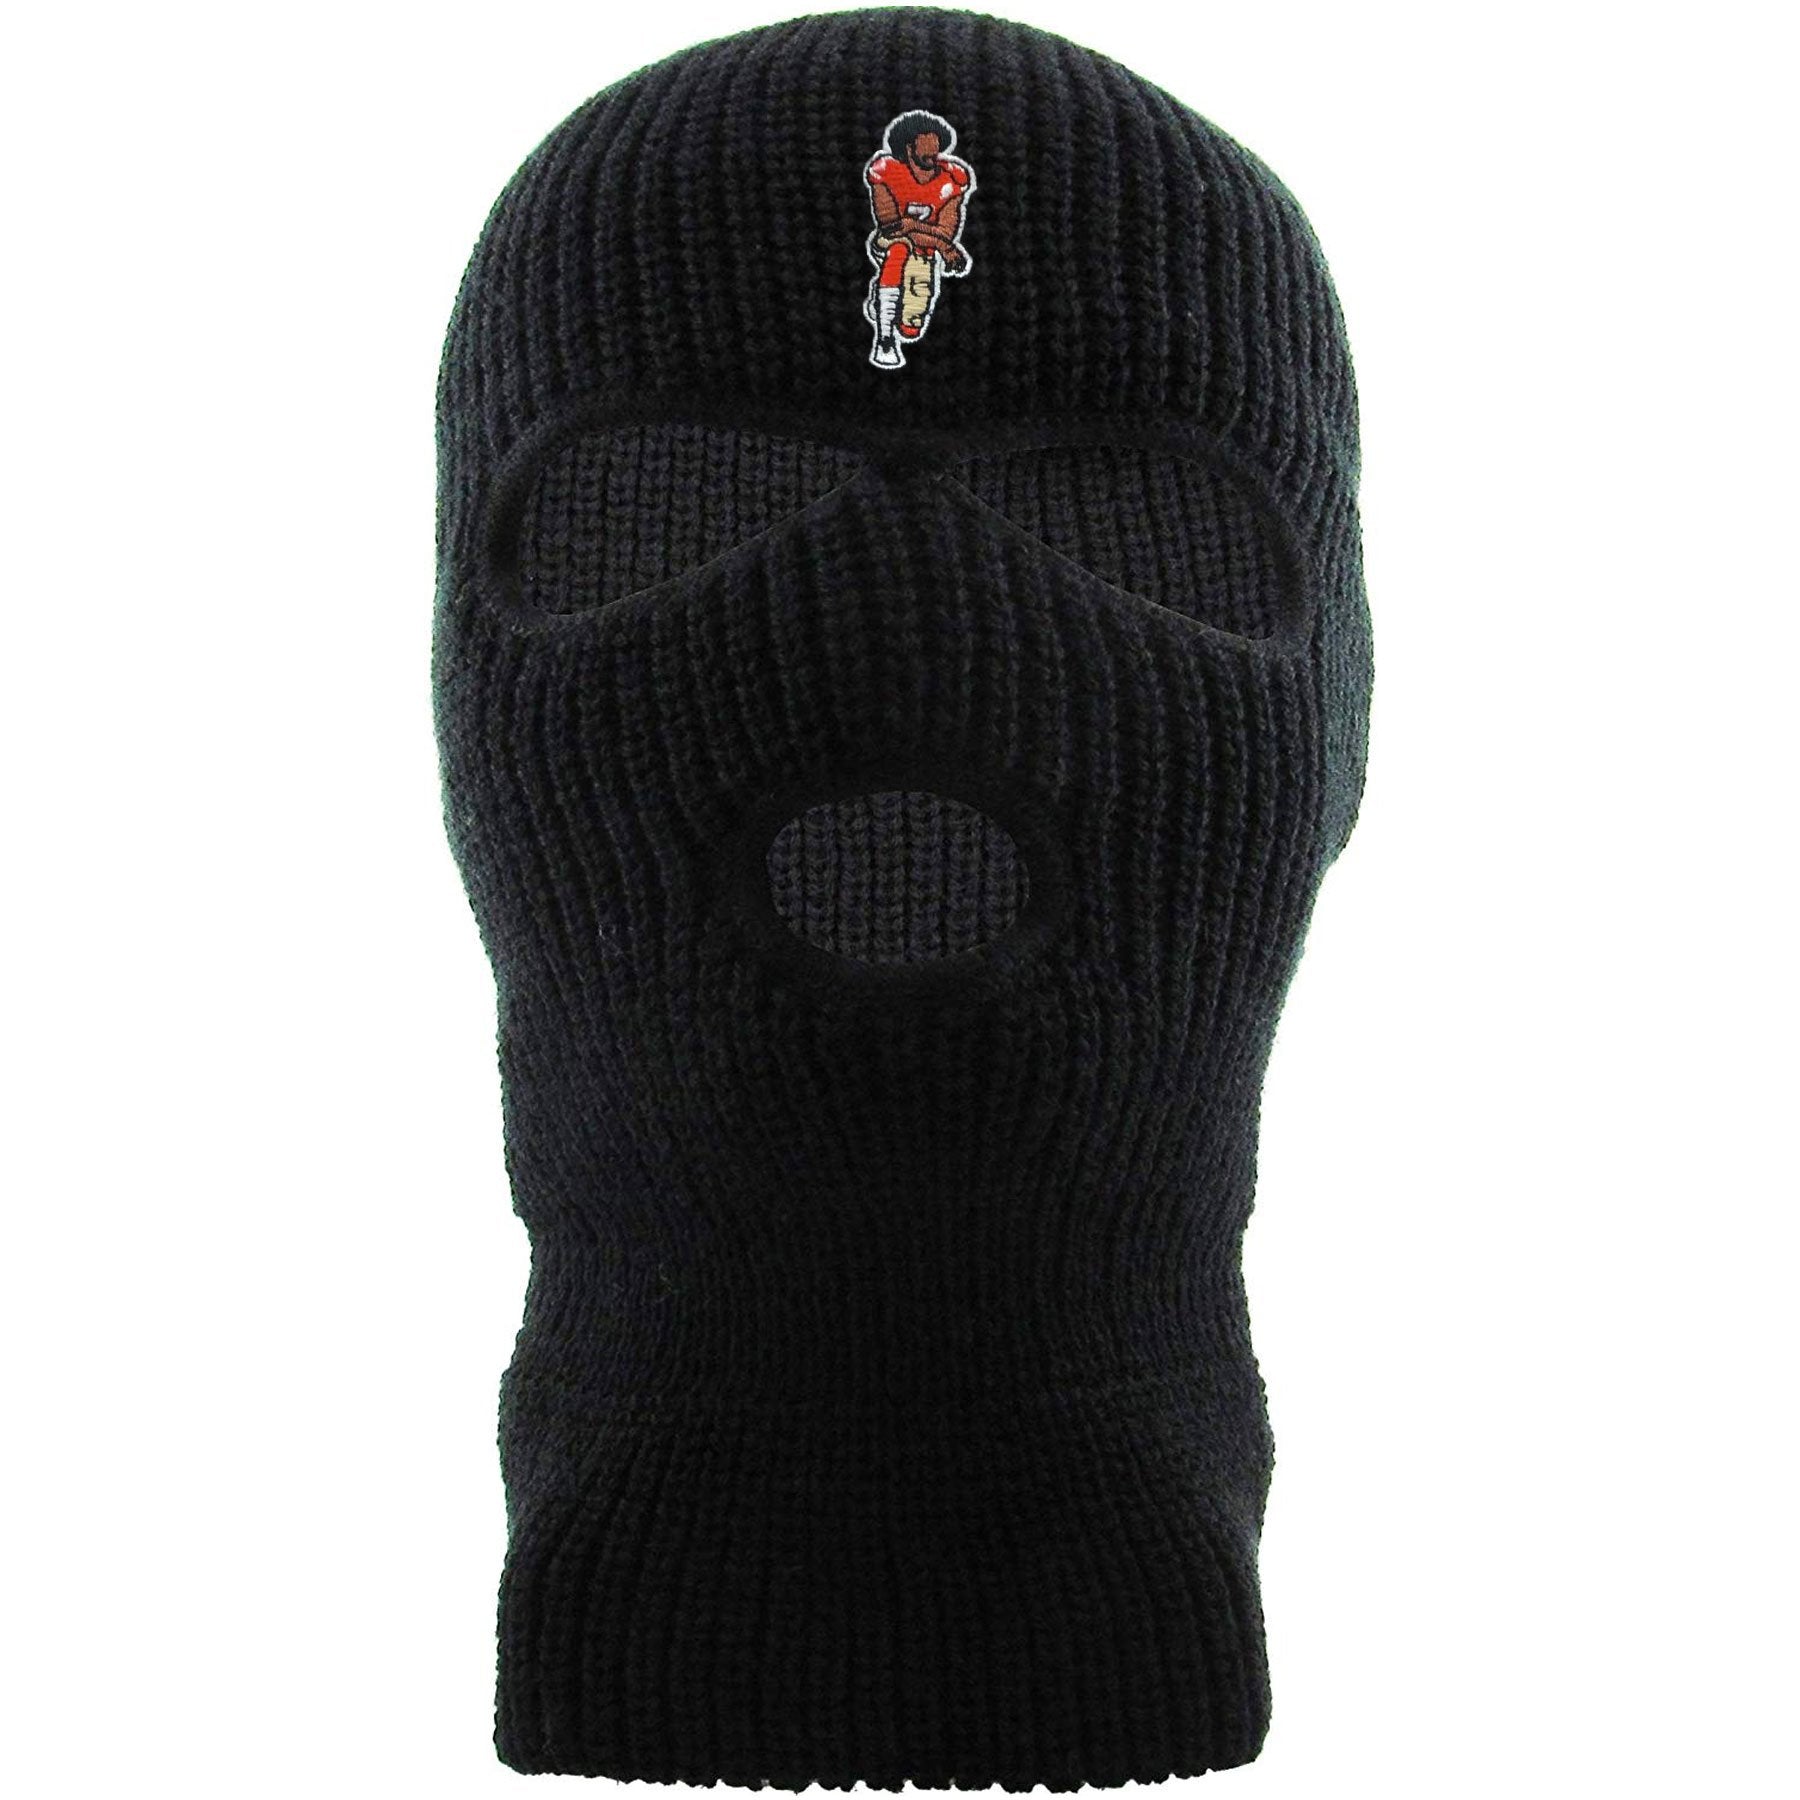 On the front of the kaepernick black ski mask is the colin kaepernick taking a knee logo